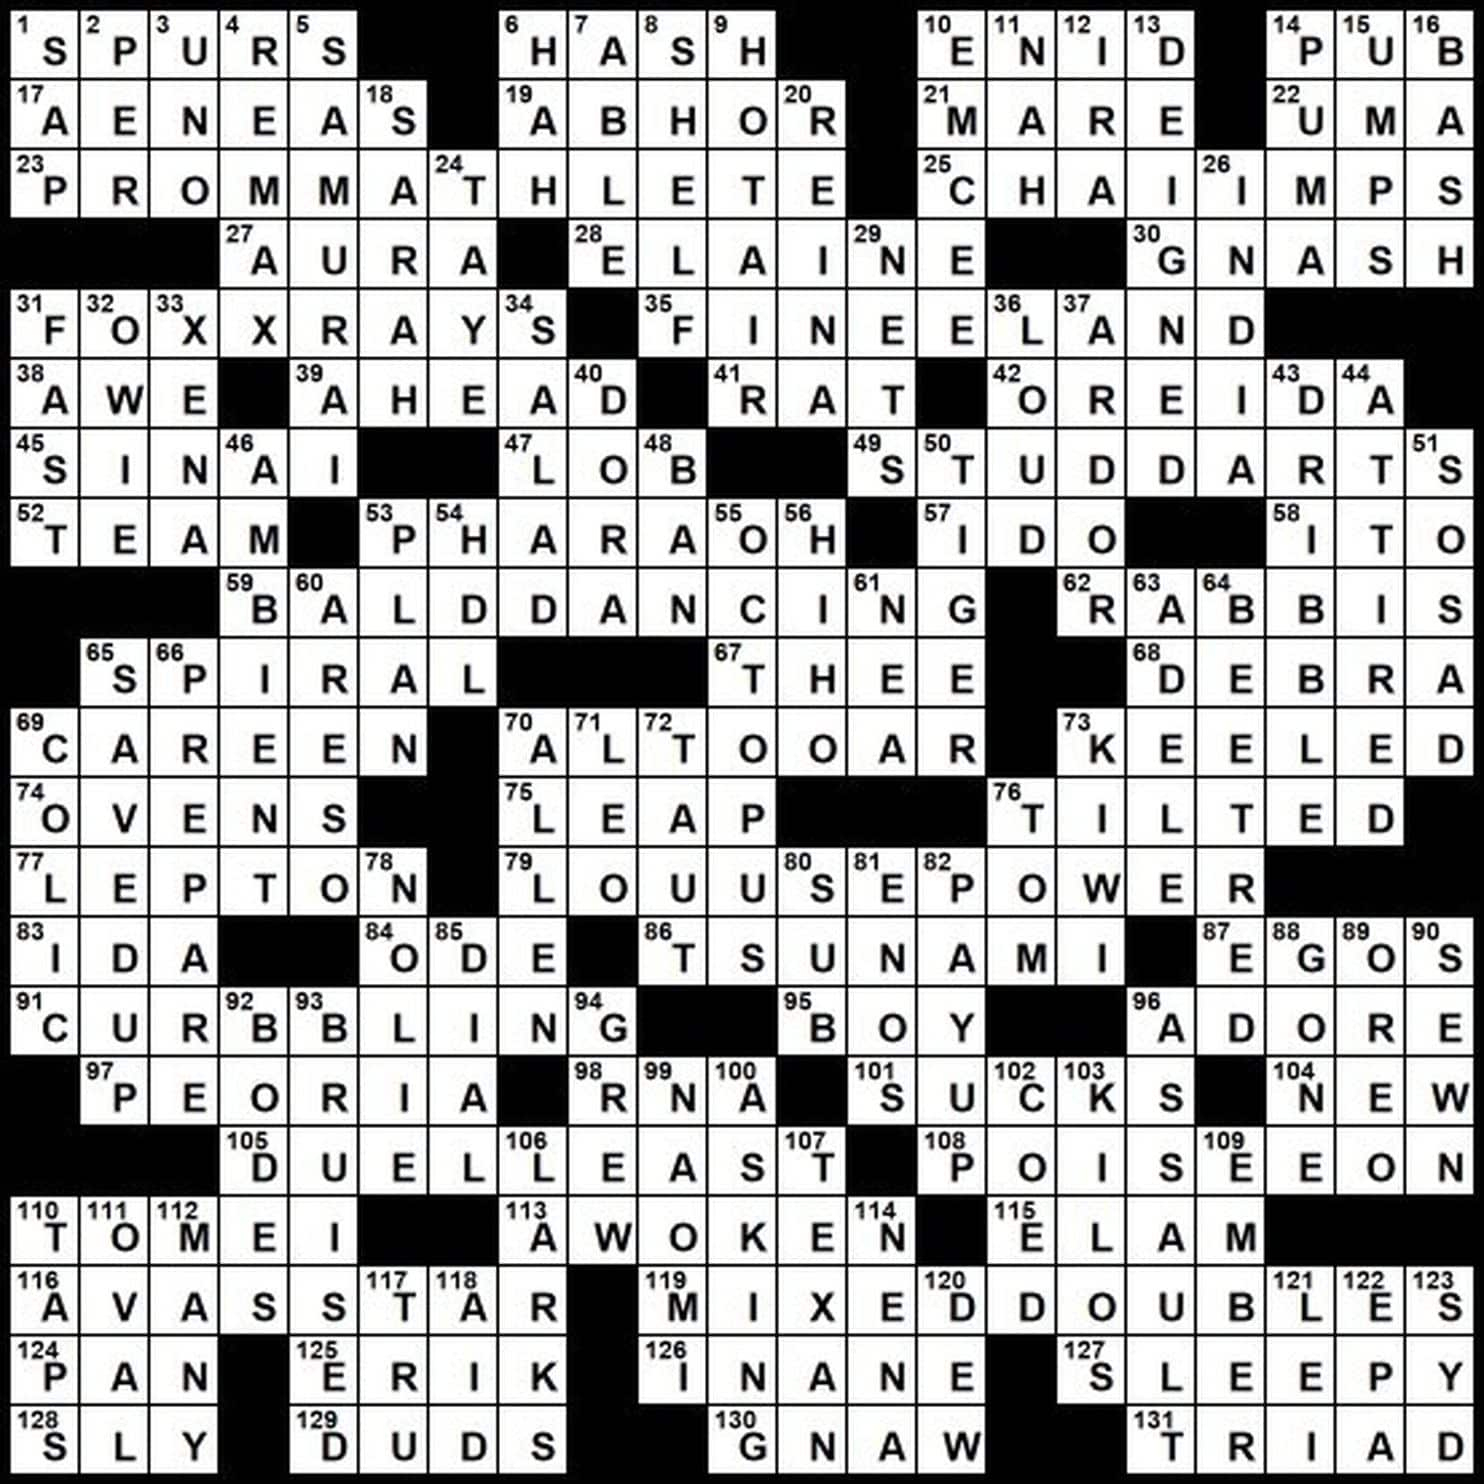 Evan Birnholz&amp;#039;s Aug. 19 Post Magazine Crossword, “It Takes Two - Washington Post Crossword Printable Version